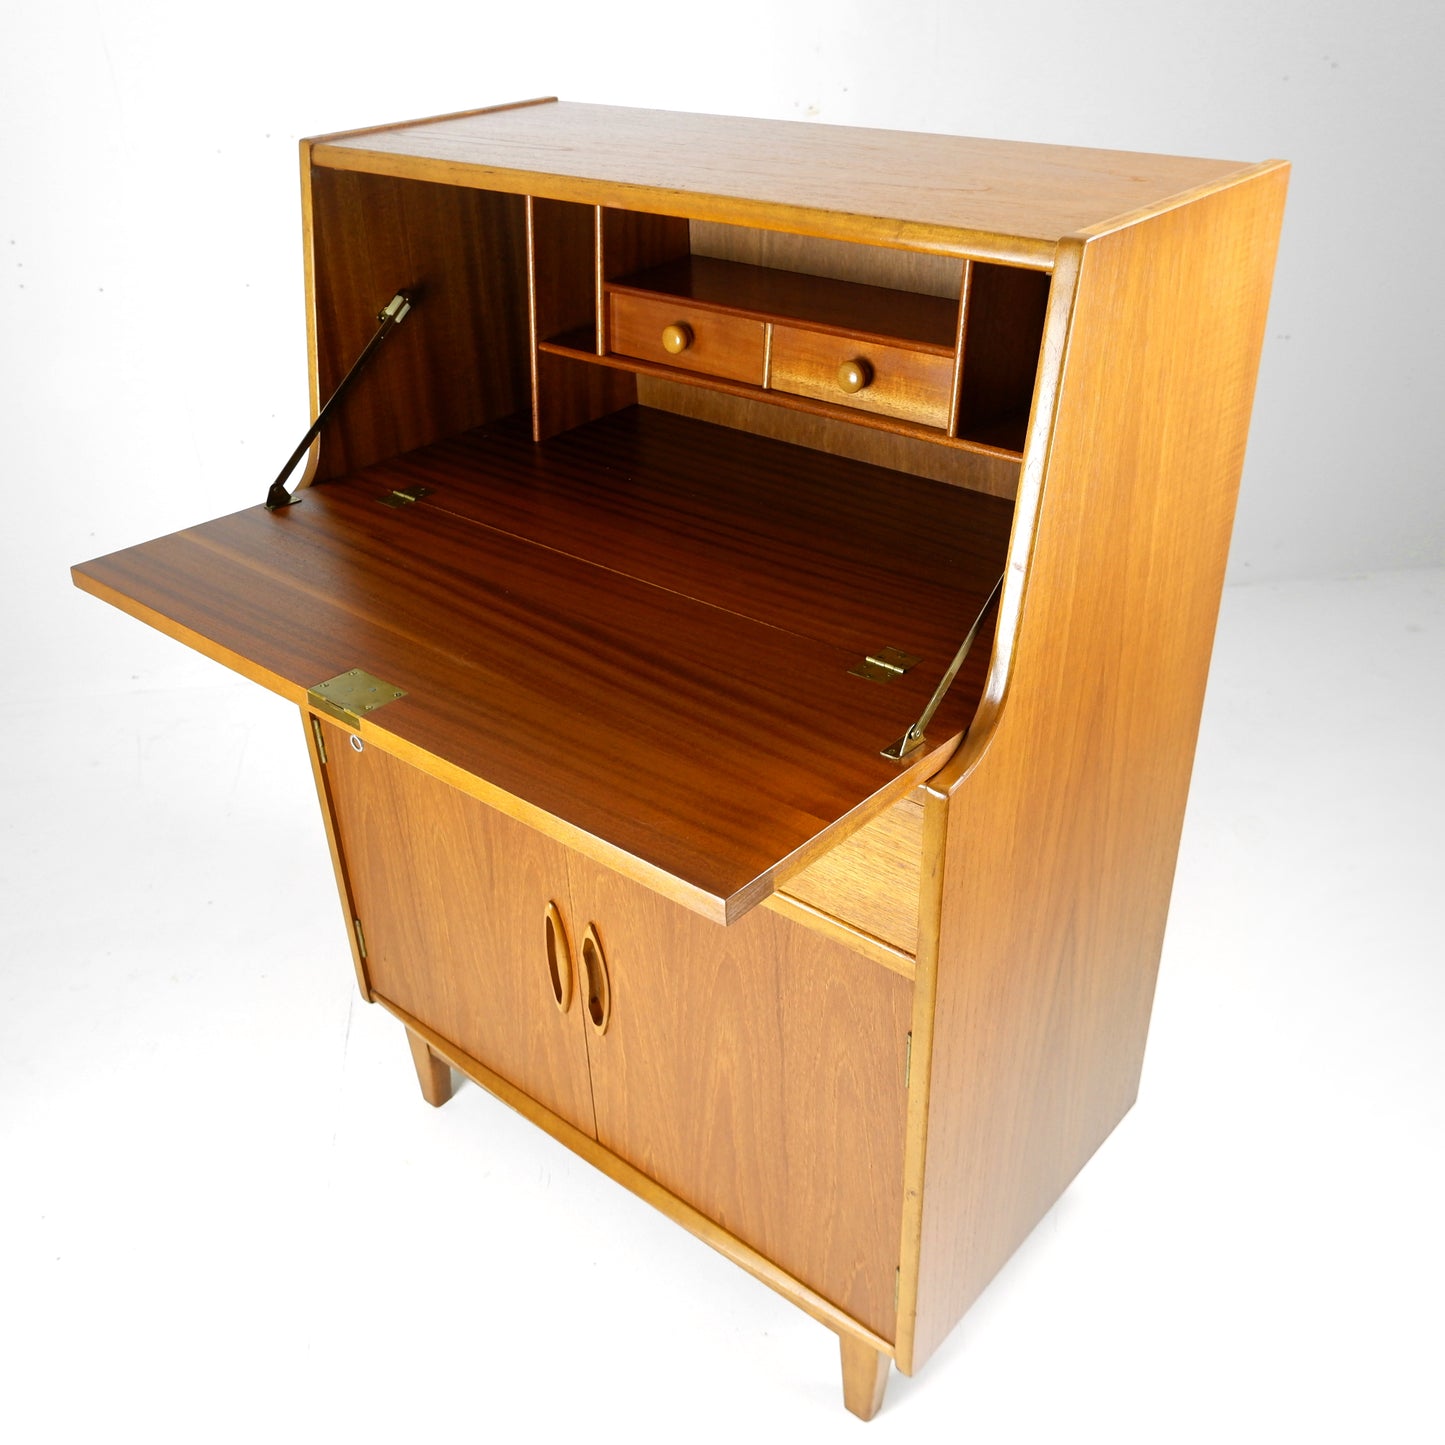 Mid Century Teak Bureau Desk by Jentique - Home Office with Storage